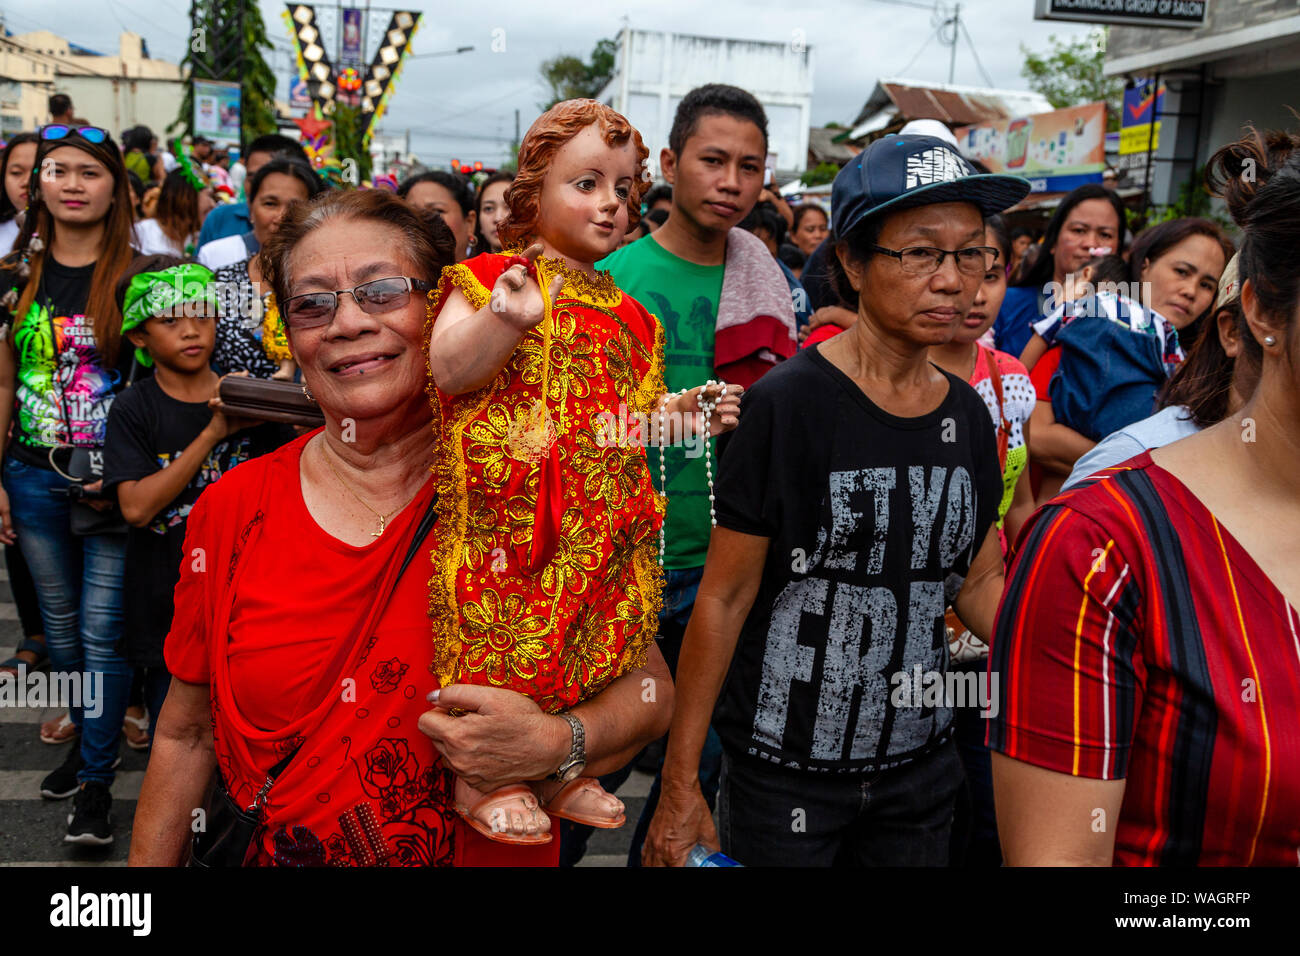 Filipinos Walk Through The Streets Carrying Statues Of Santo Nino Shouting ‘Viva Santo Nino’ During The Ati-Atihan Festival, Kalibo, The Philippines. Stock Photo